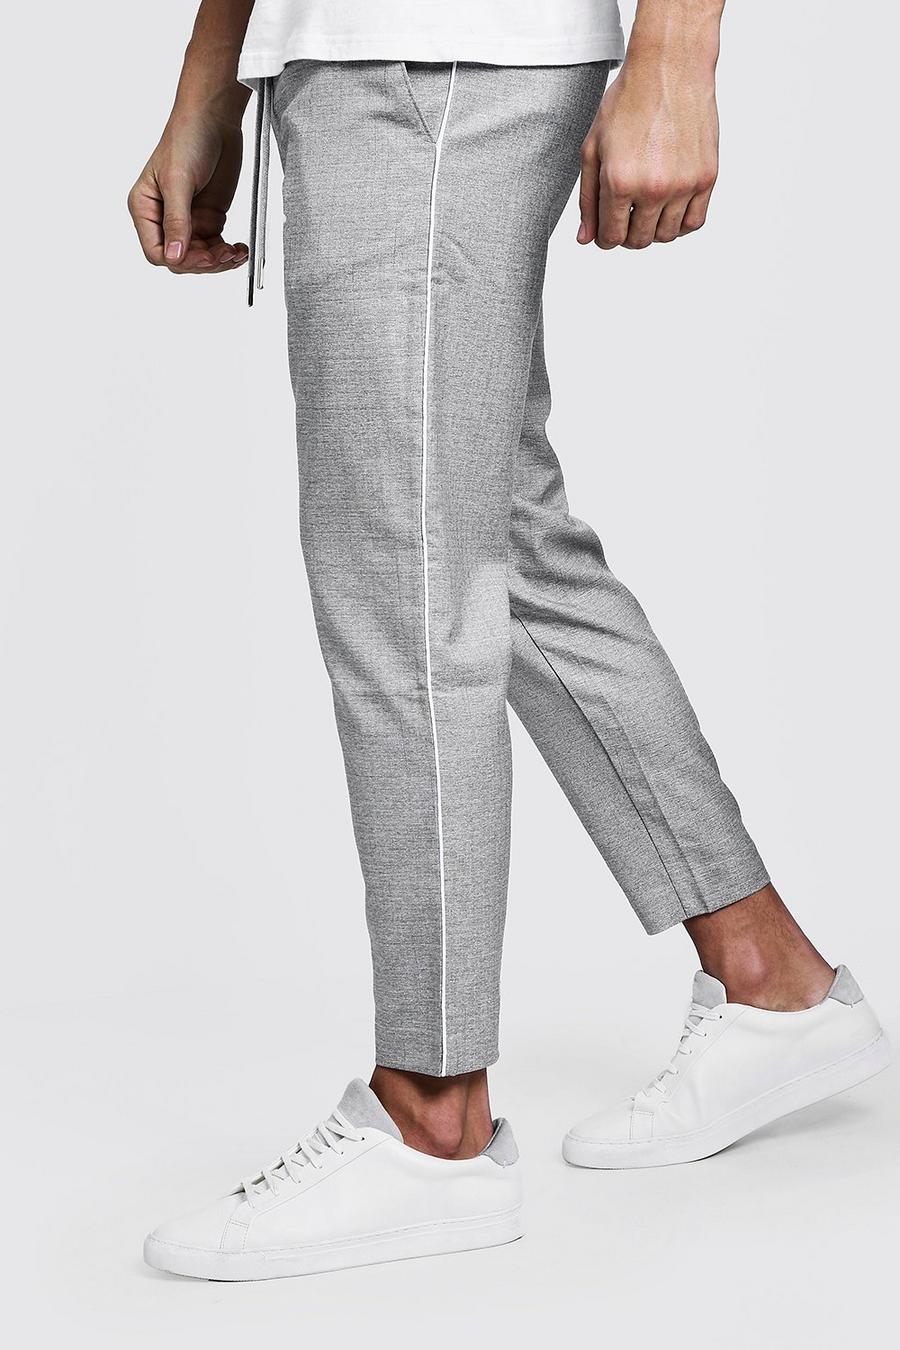 DA Pantaloni jogging grigi con profili laterali bianchi image number 1